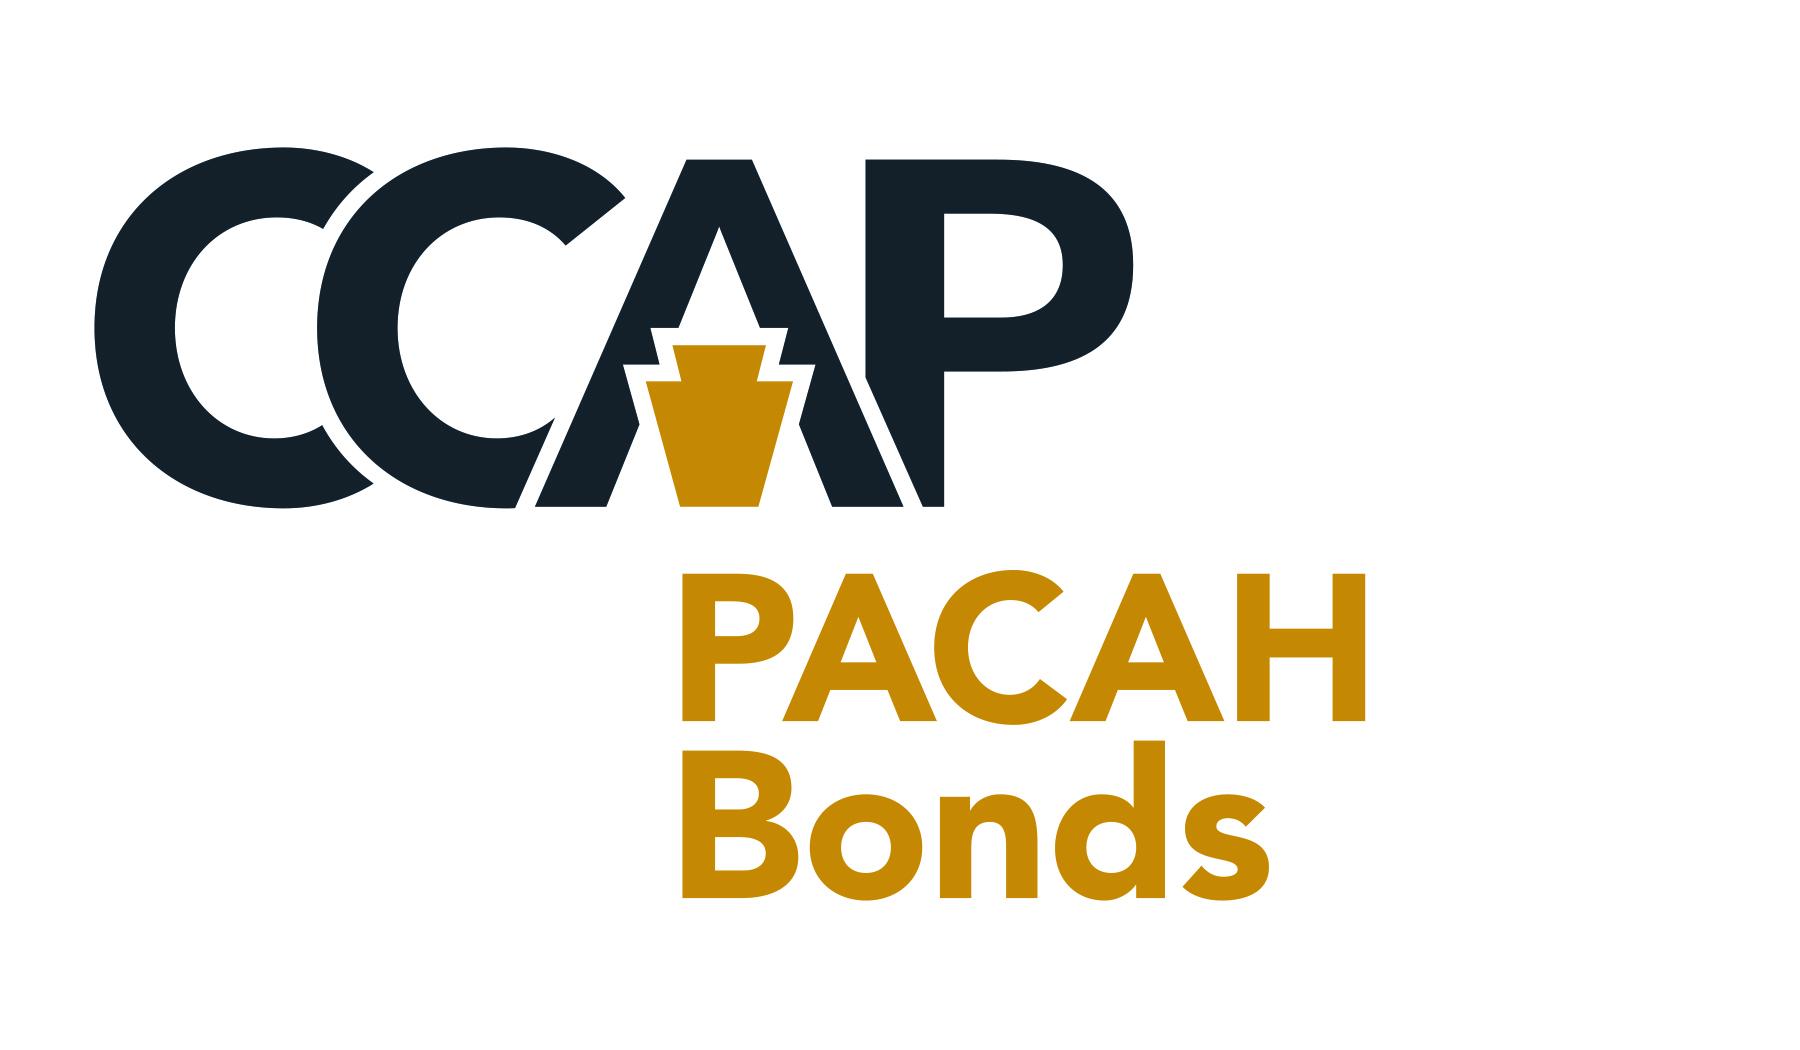 CCAP PACAH Bonds logo